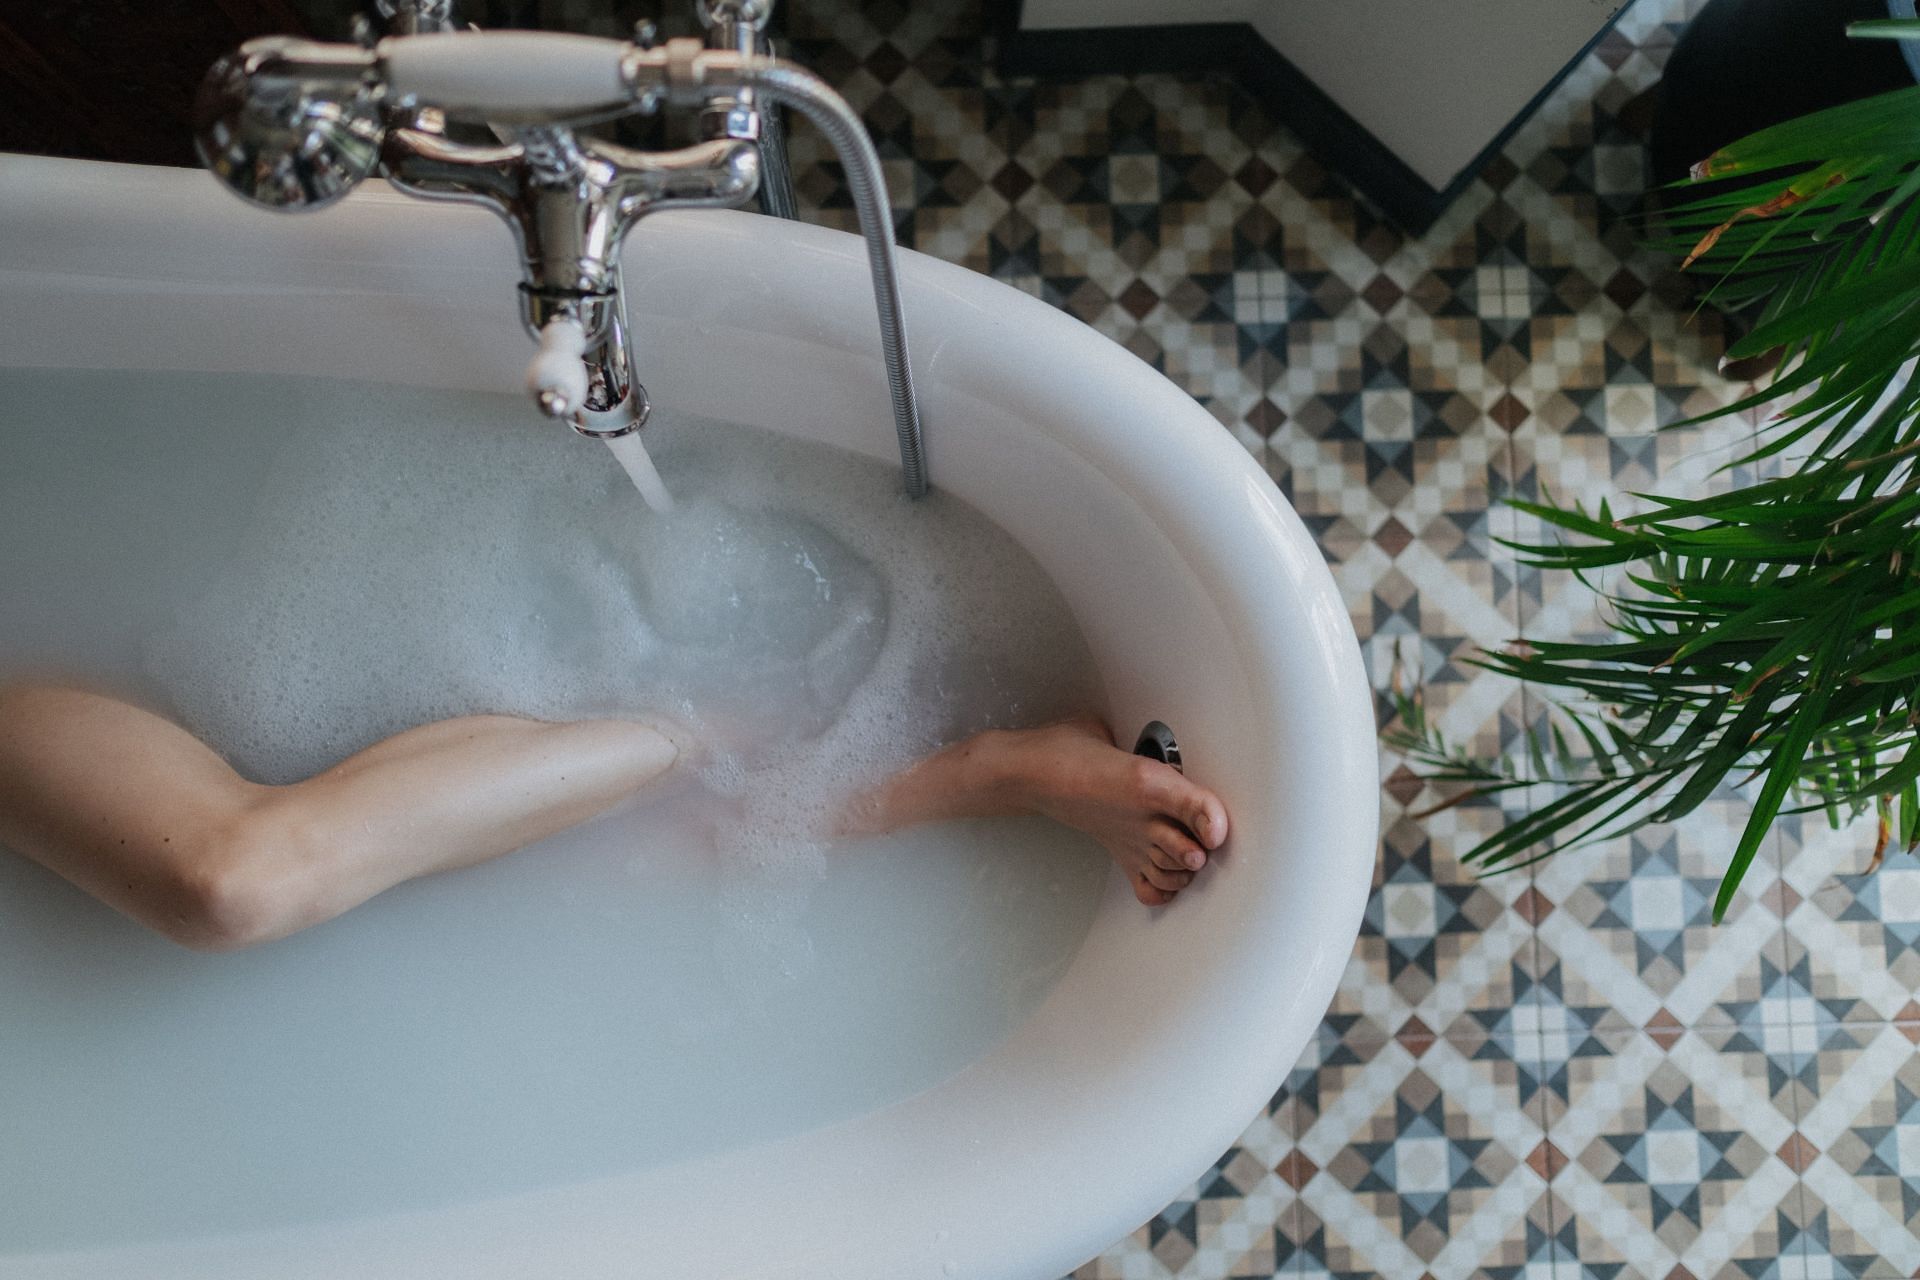 Taking an epsom bath can help. (Image via Pexels/Cottonbro)